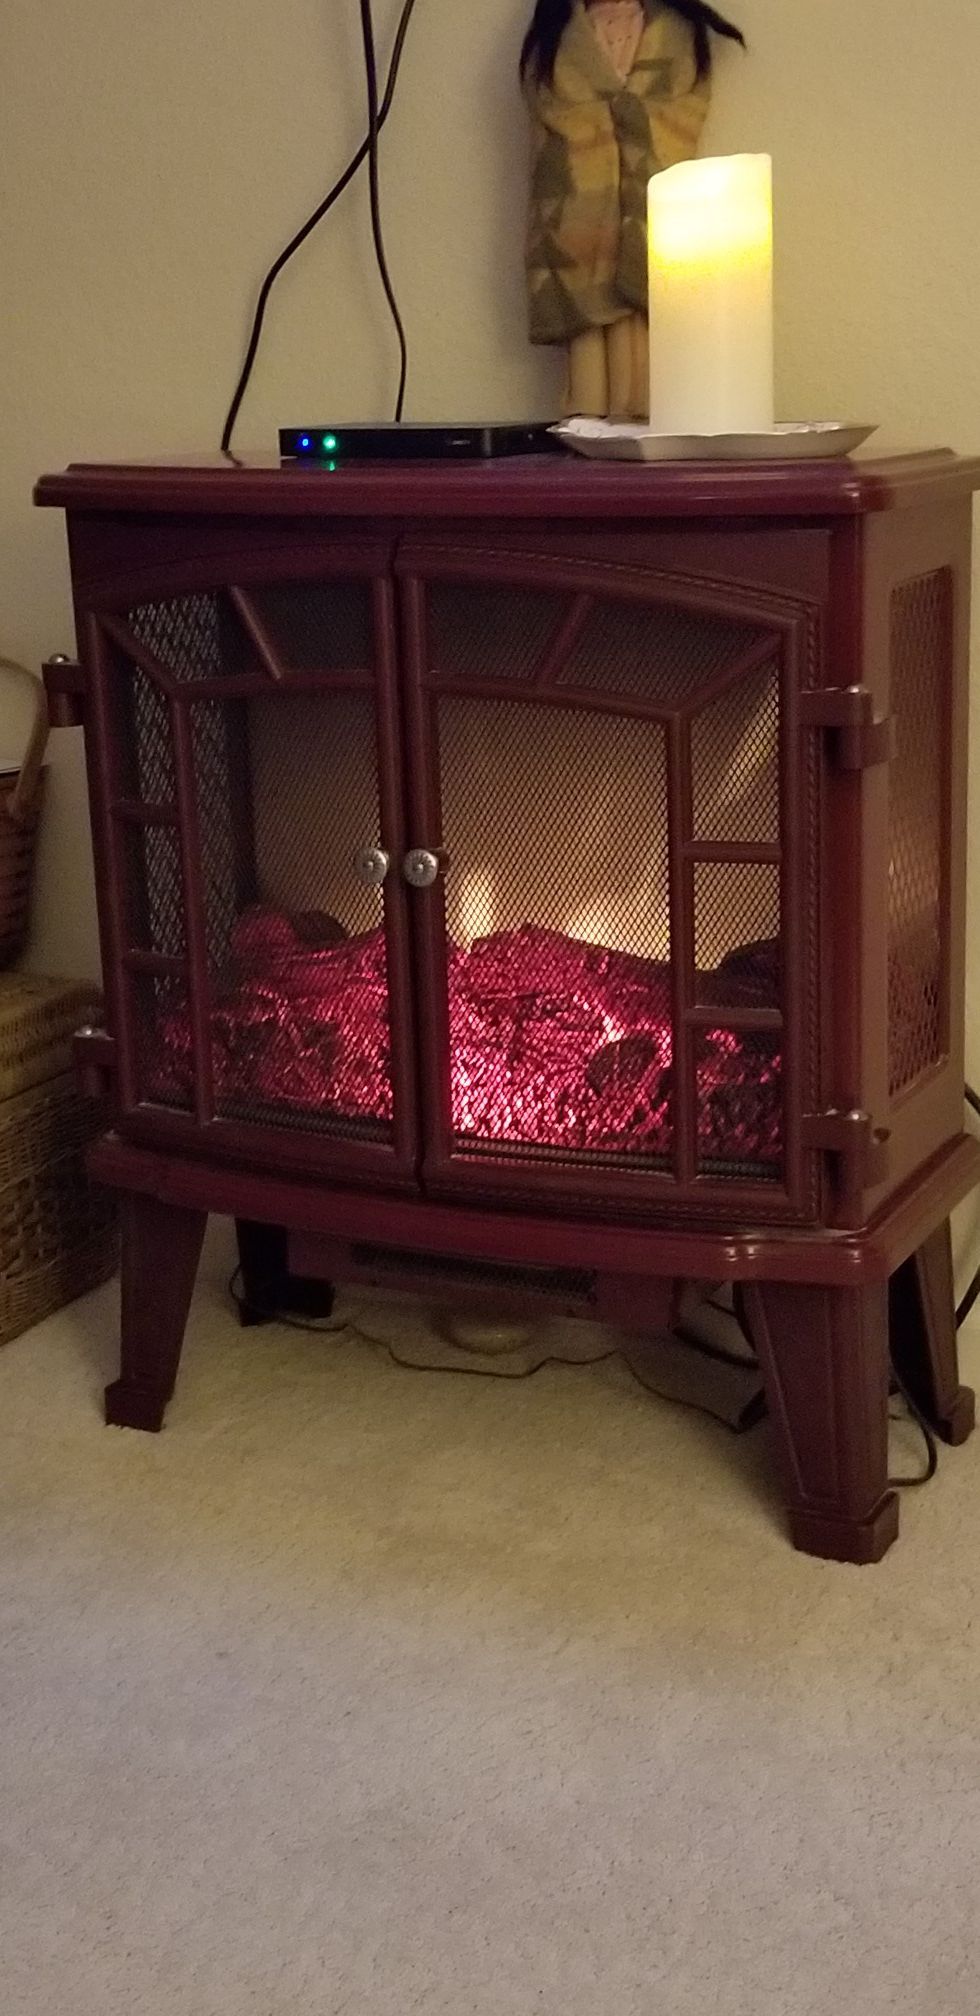 Duraflame Fireplace